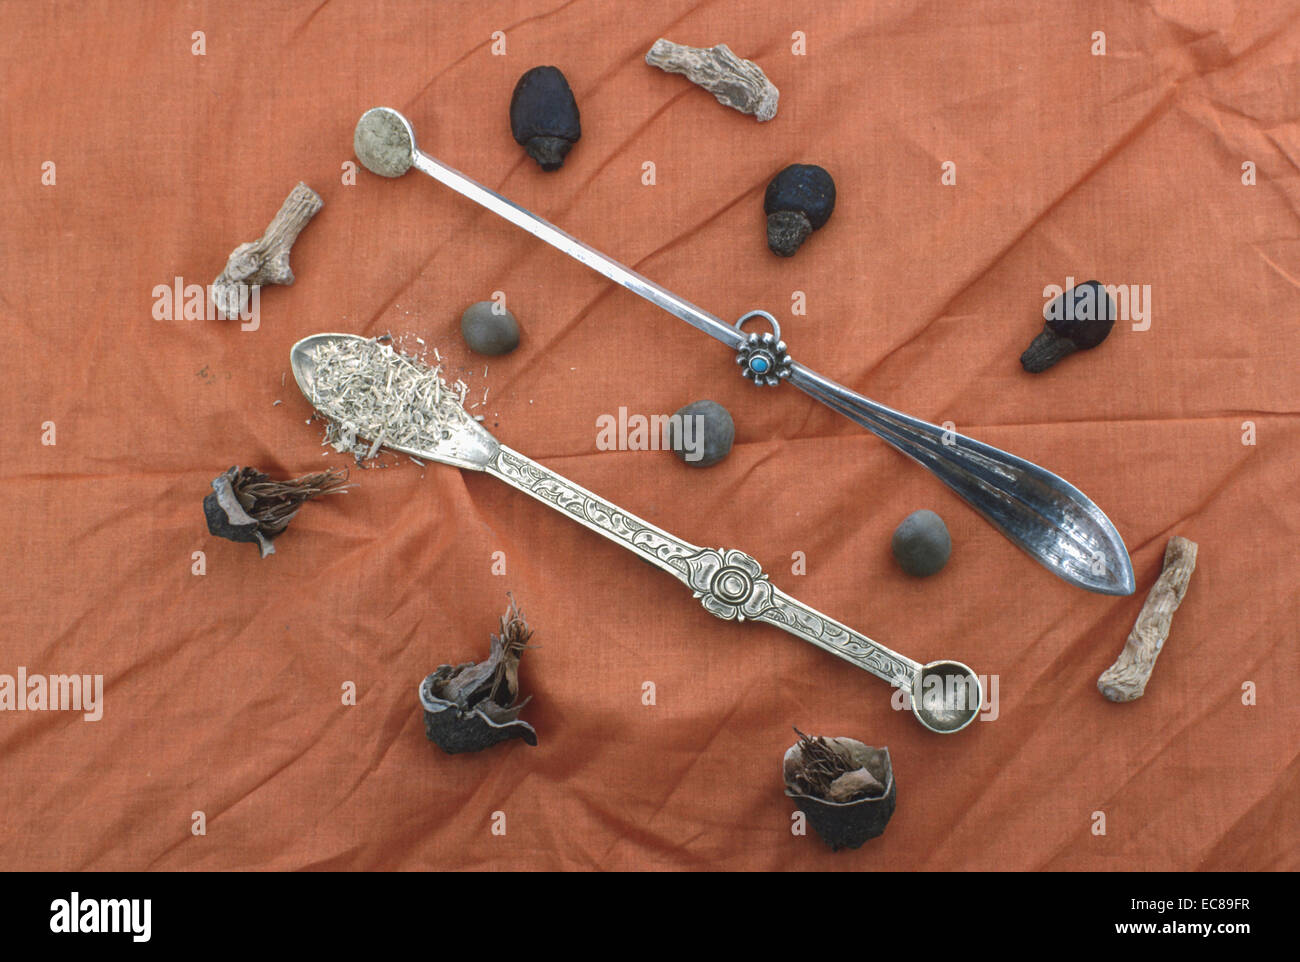 Ladakh Tibet silver turquoise stone decorative traditional Tibetan medical measuring instruments medicine spoons Stock Photo